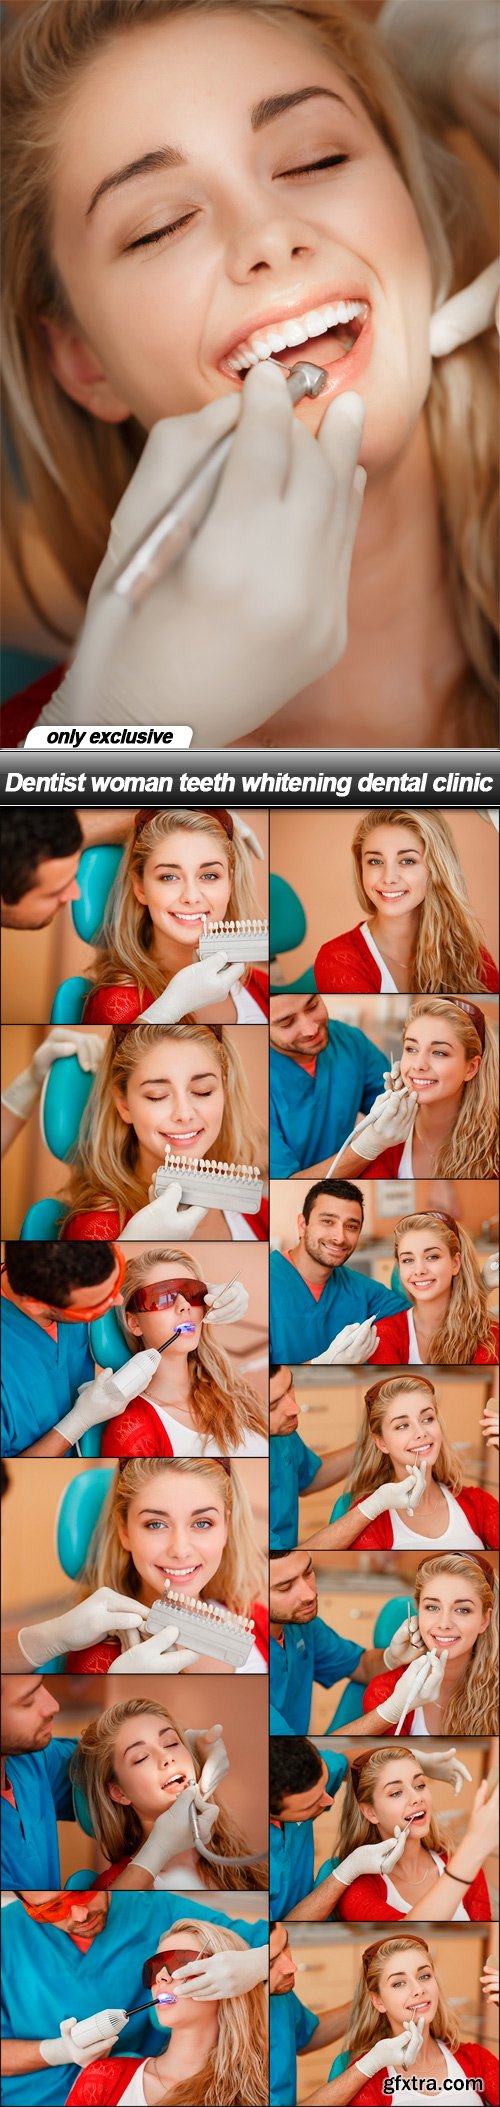 Dentist woman teeth whitening dental clinic - 14 UHQ JPEG